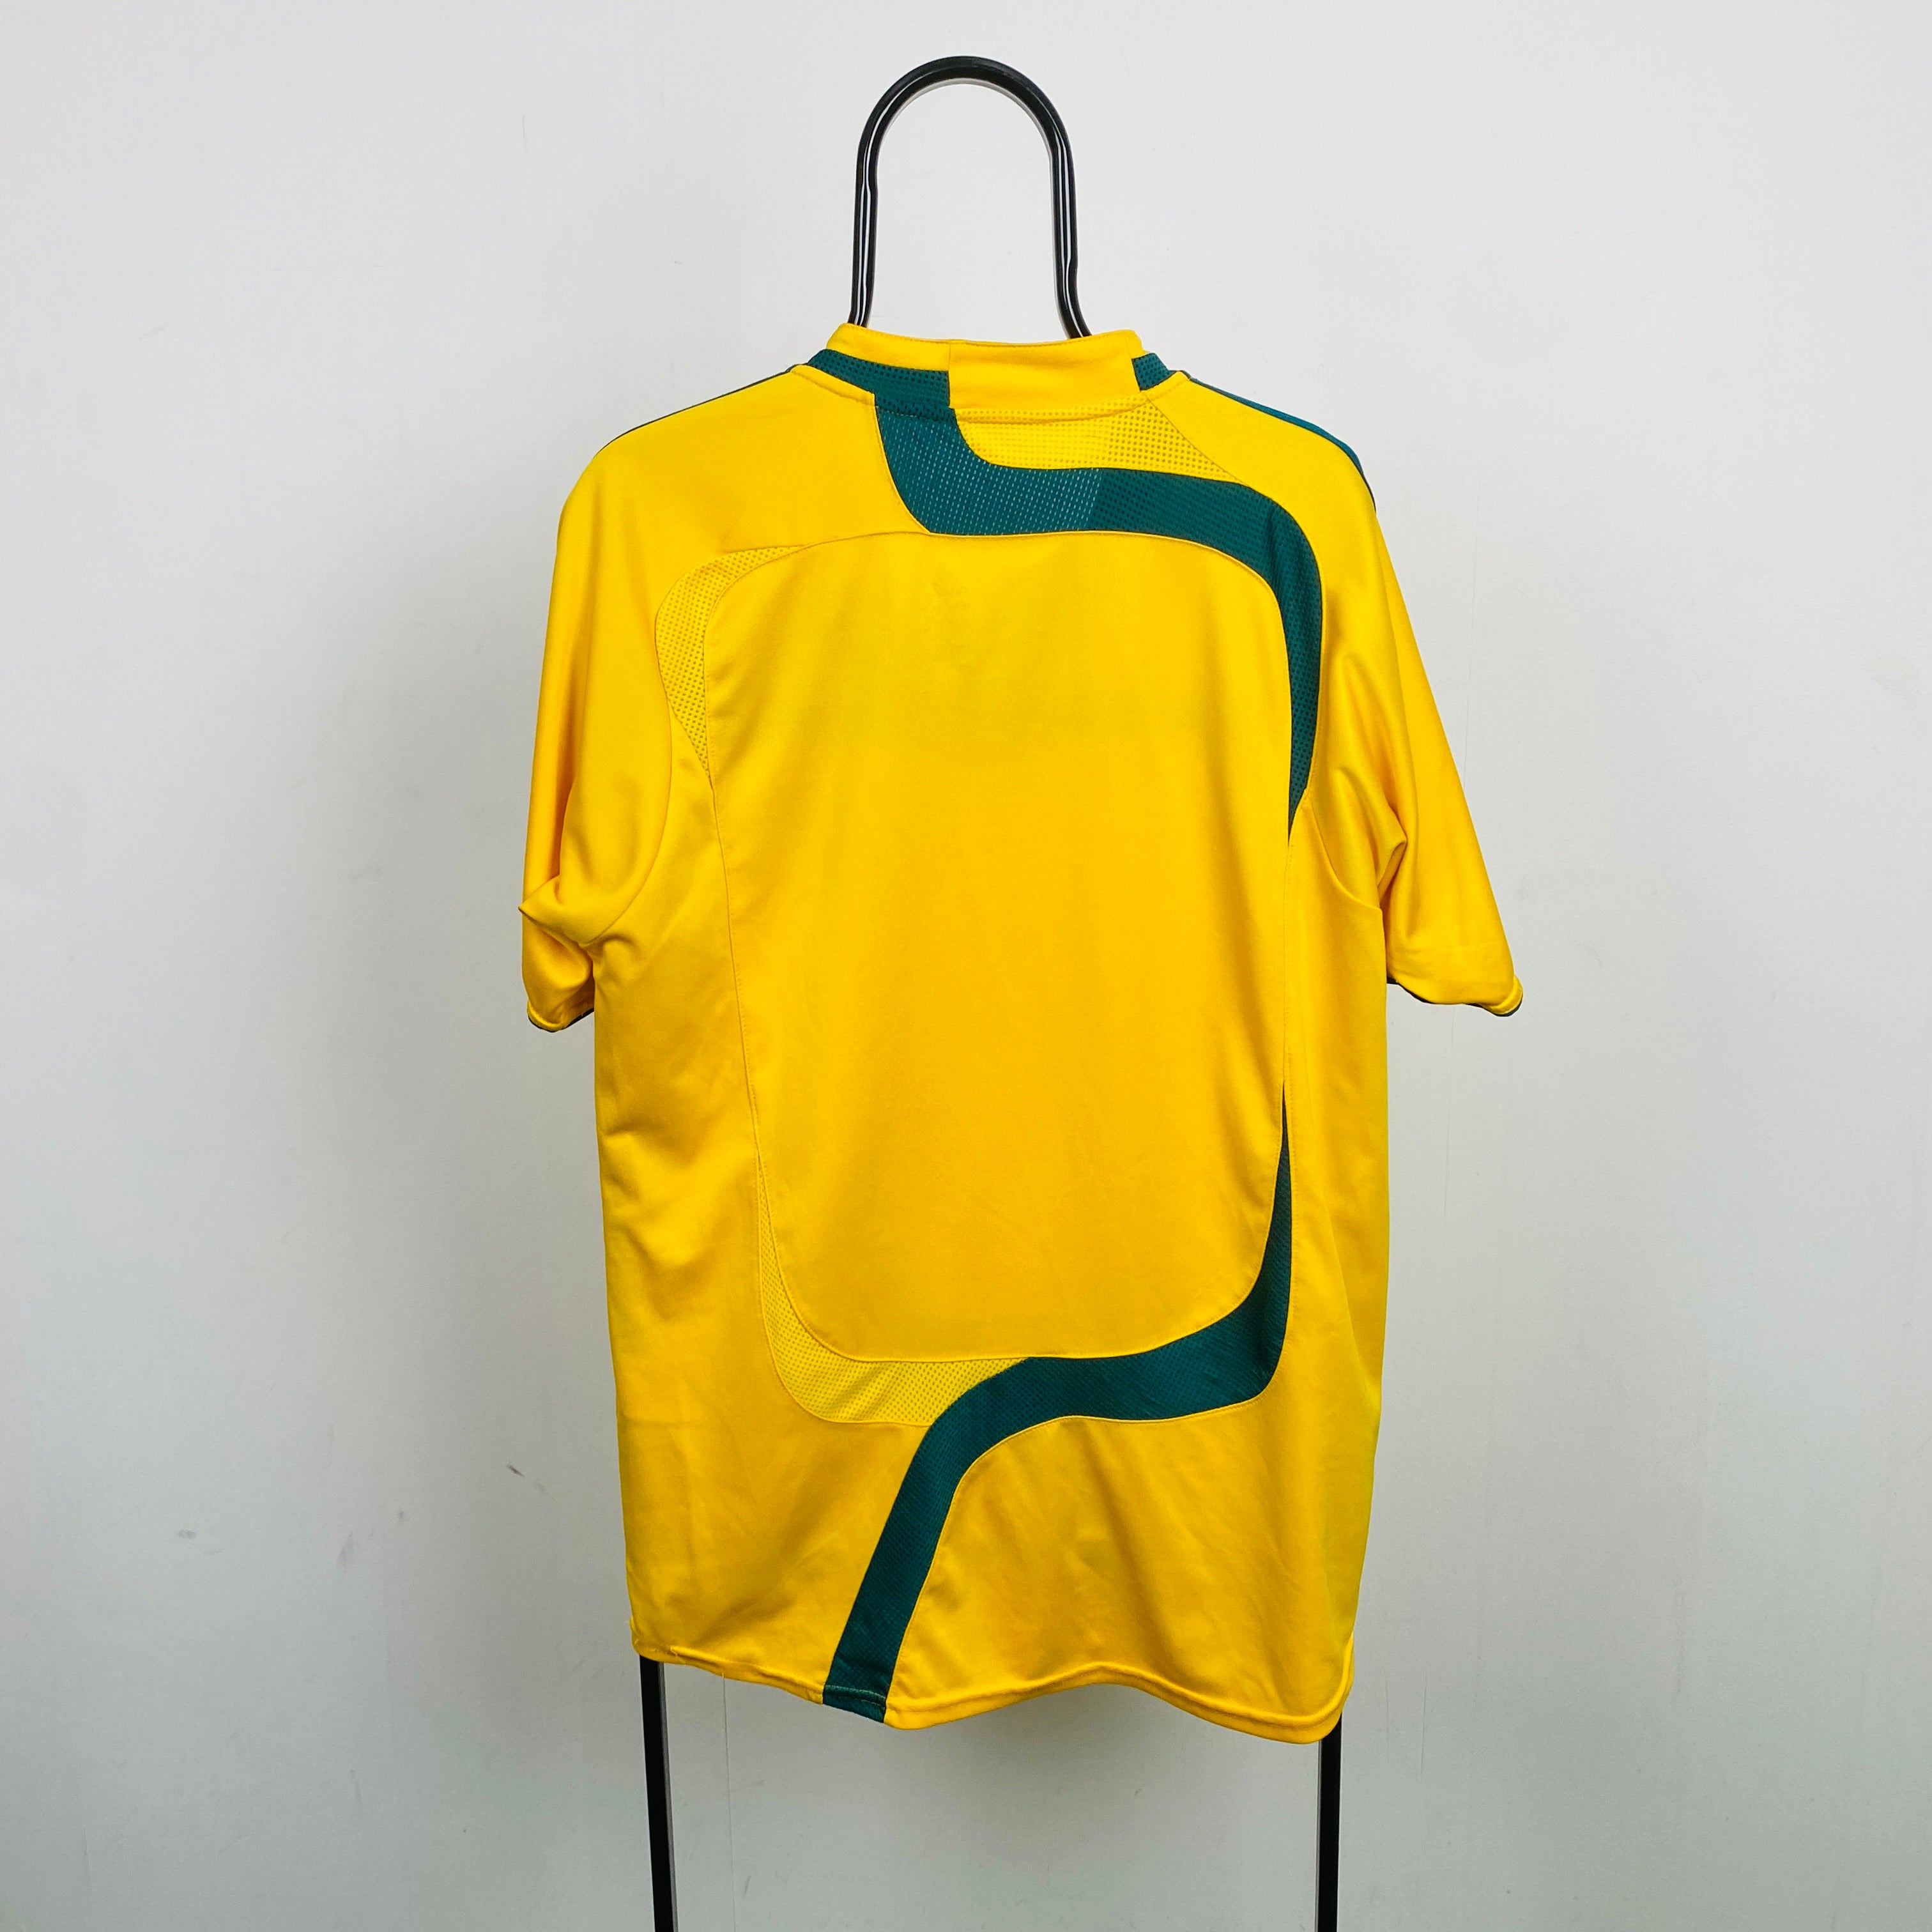 00s Adidas LA Galaxy Football Shirt T-Shirt Yellow XL